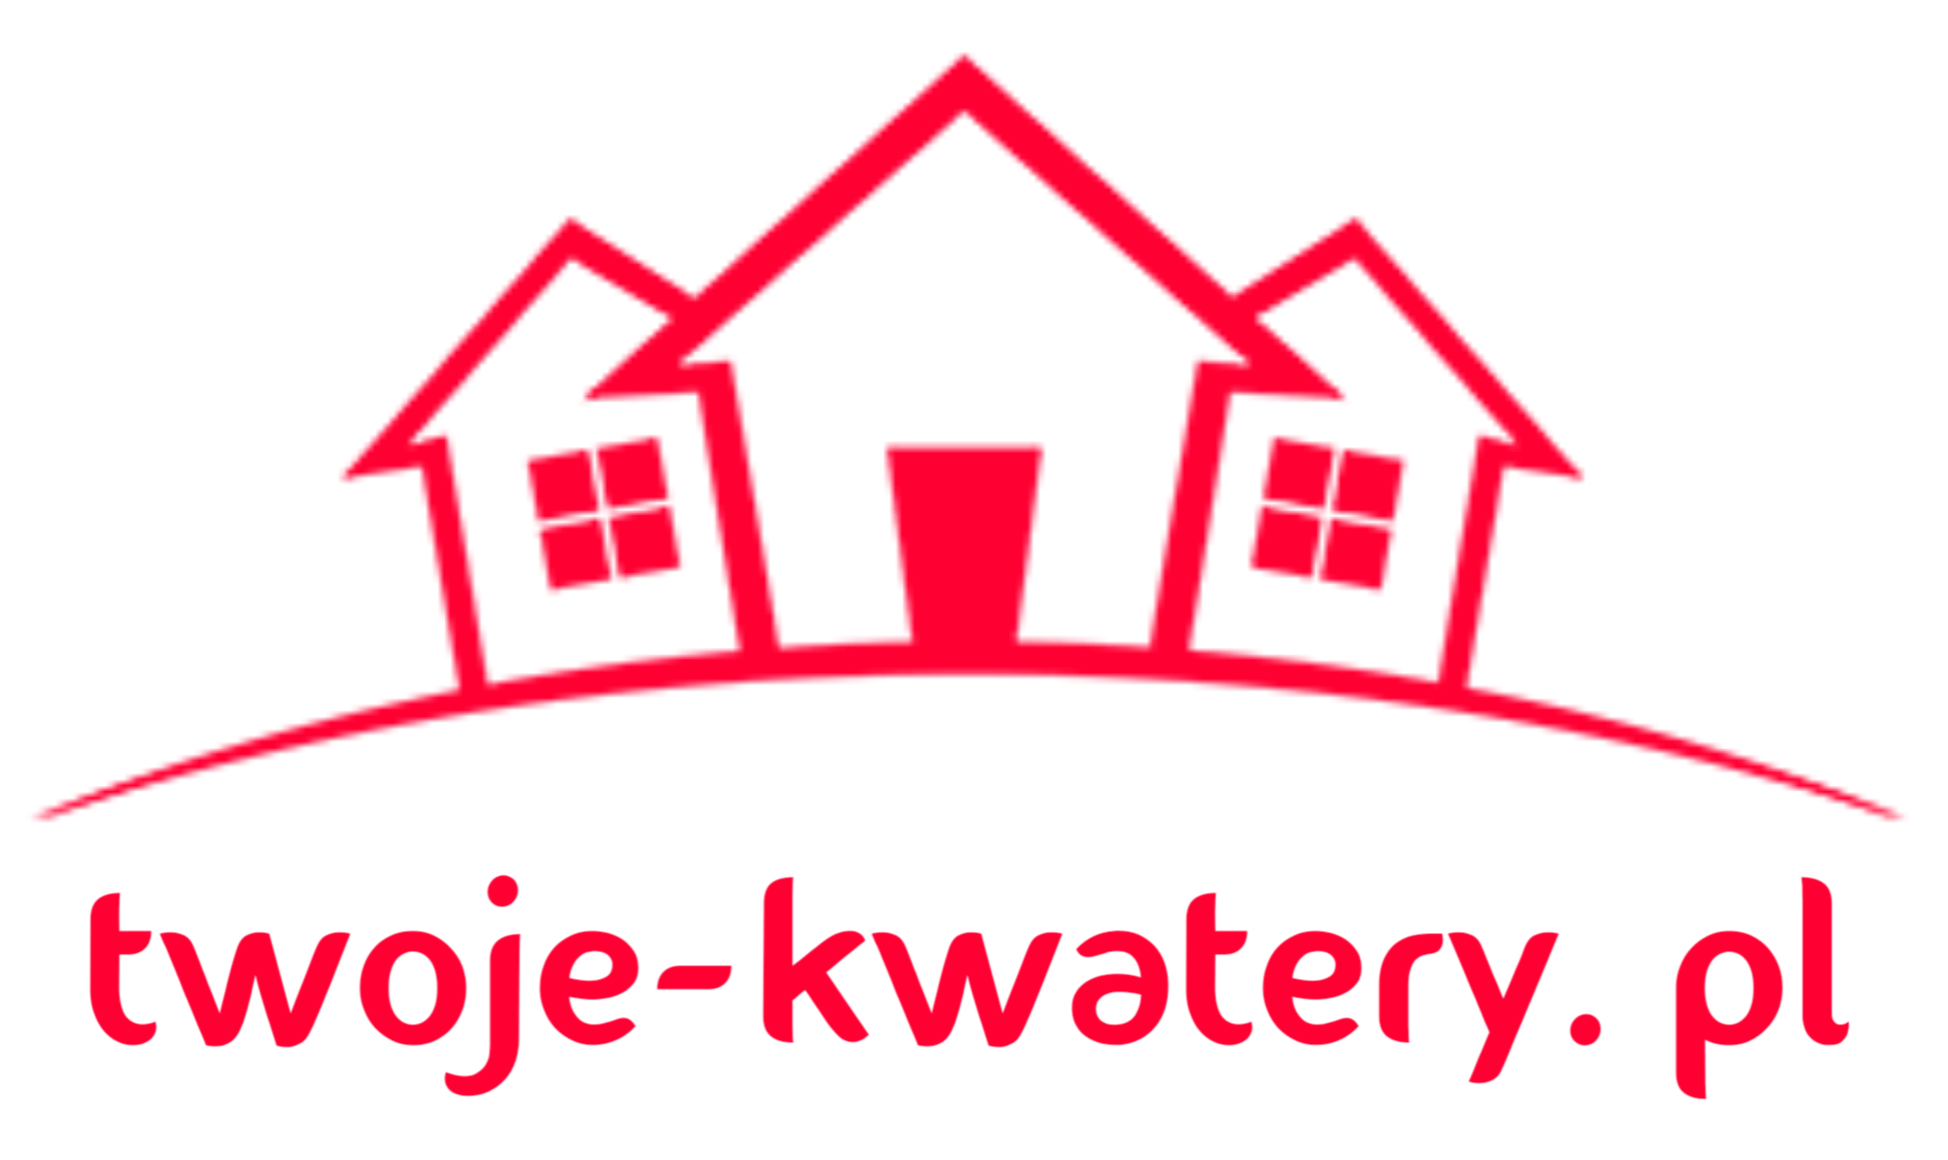 Twoje-Kwatery.pl - hostele, kwatery, noclegi, hotele pracownicze